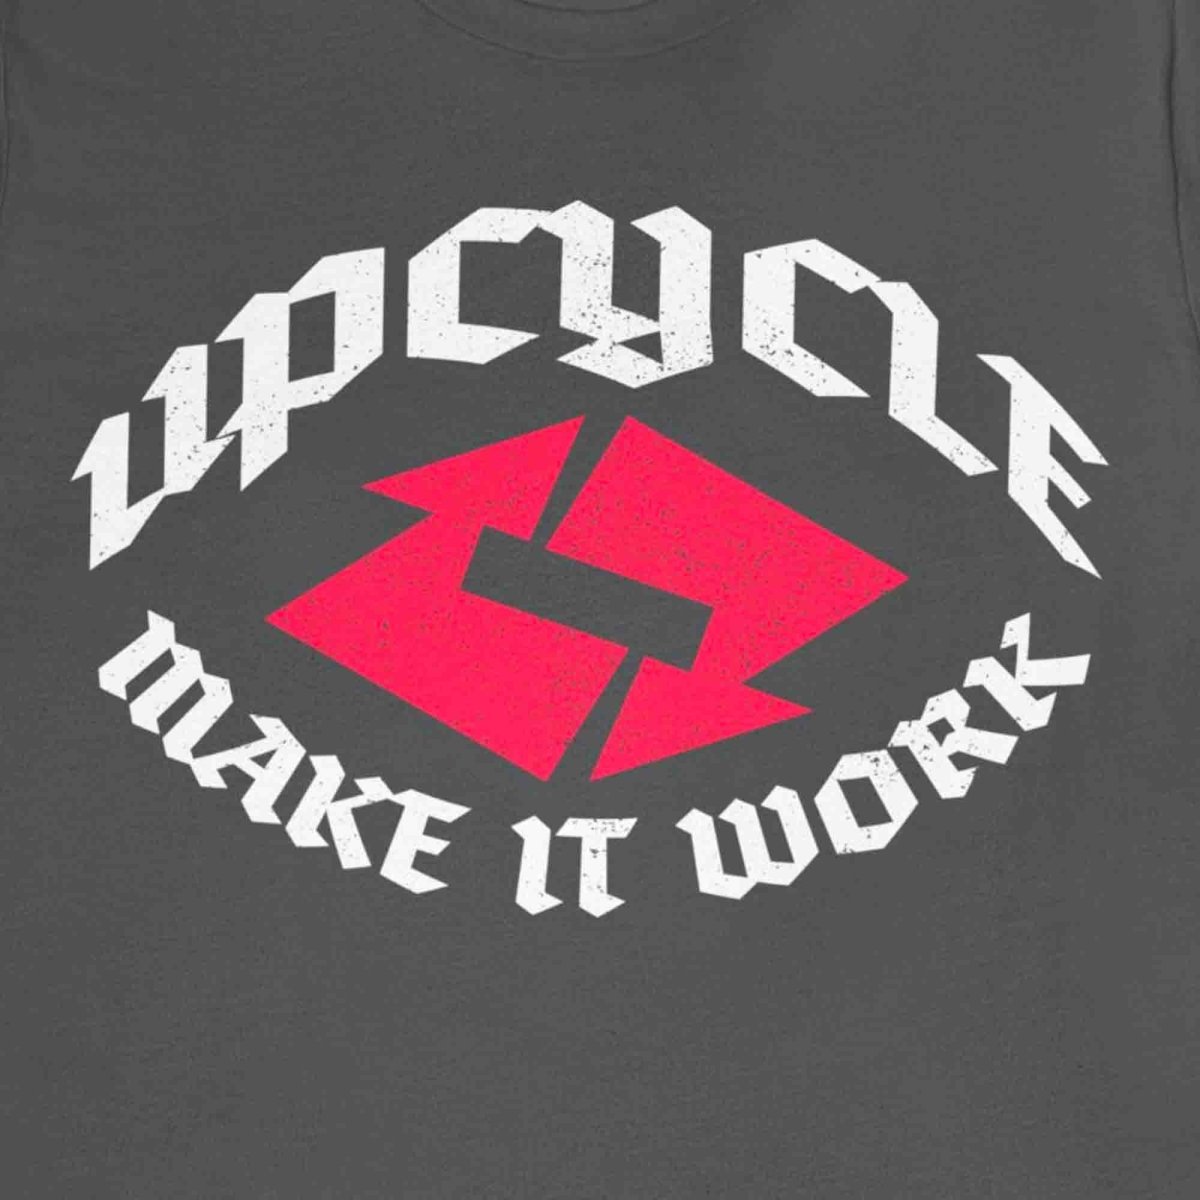 Upcycle Make It Work Premium T-Shirt, ReUse, Remake, Redo, DIY, Repurpose, Recycle, Reclaim, Self Reliance, Fix It